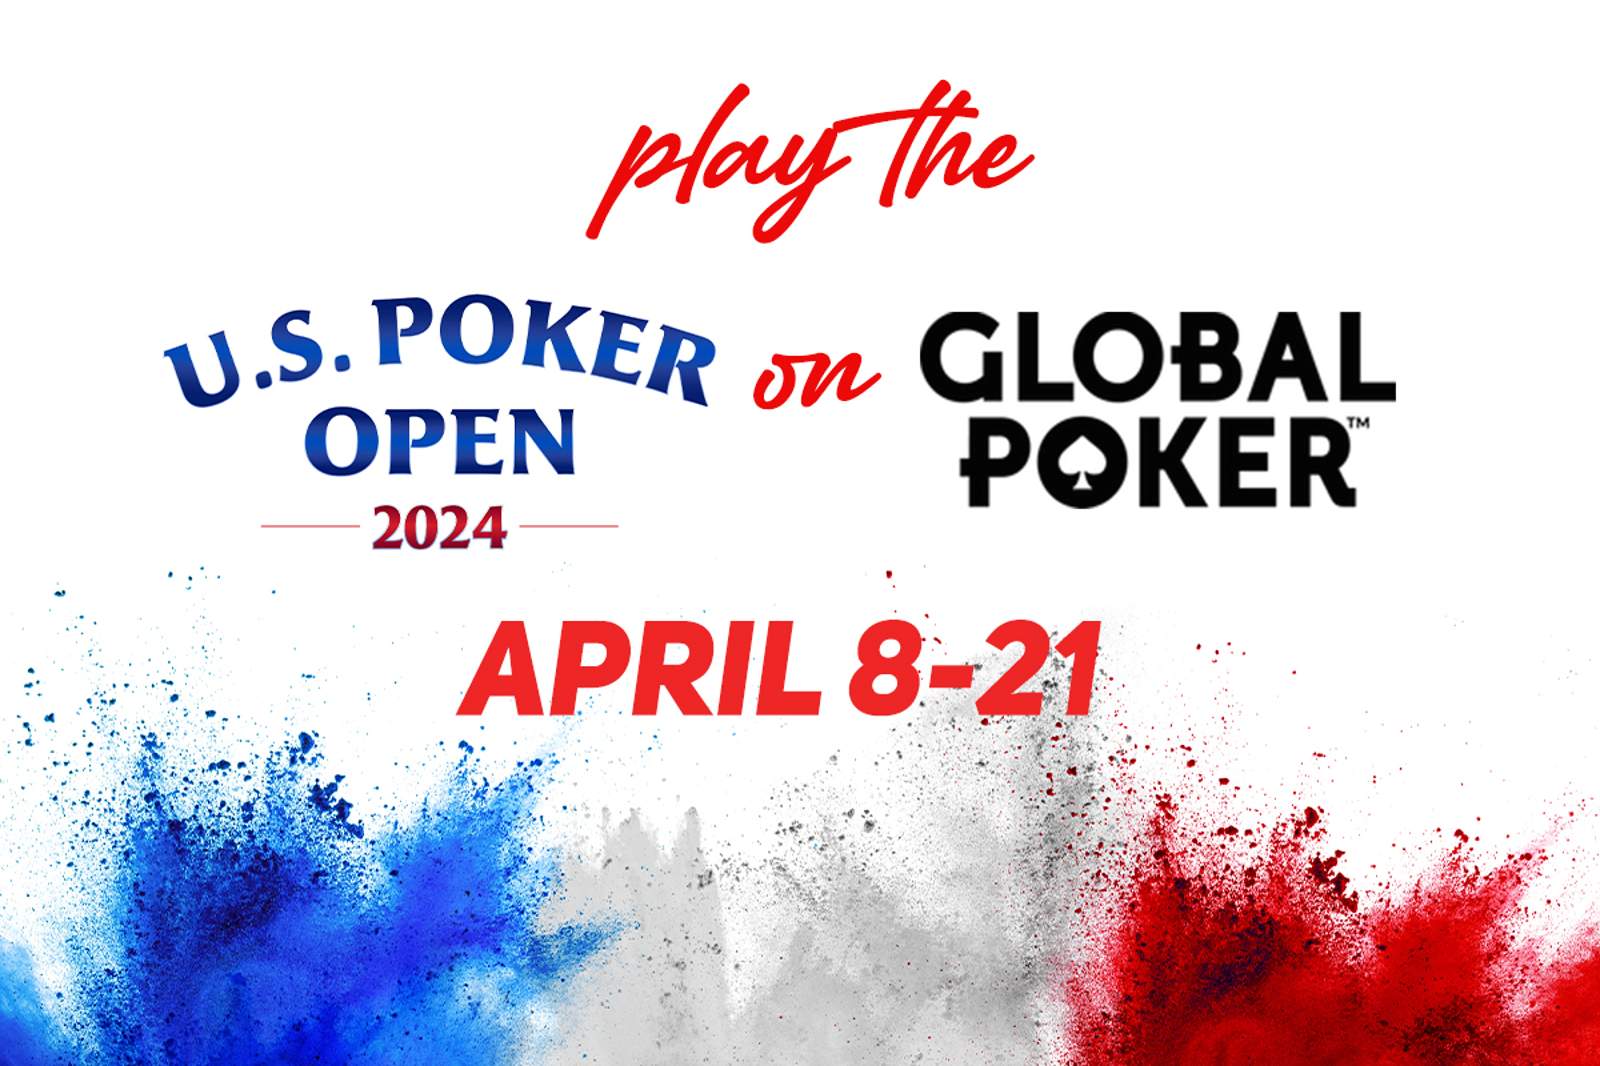 Global Poker Hosts 2024 U.S. Poker Open Online Starting April  8